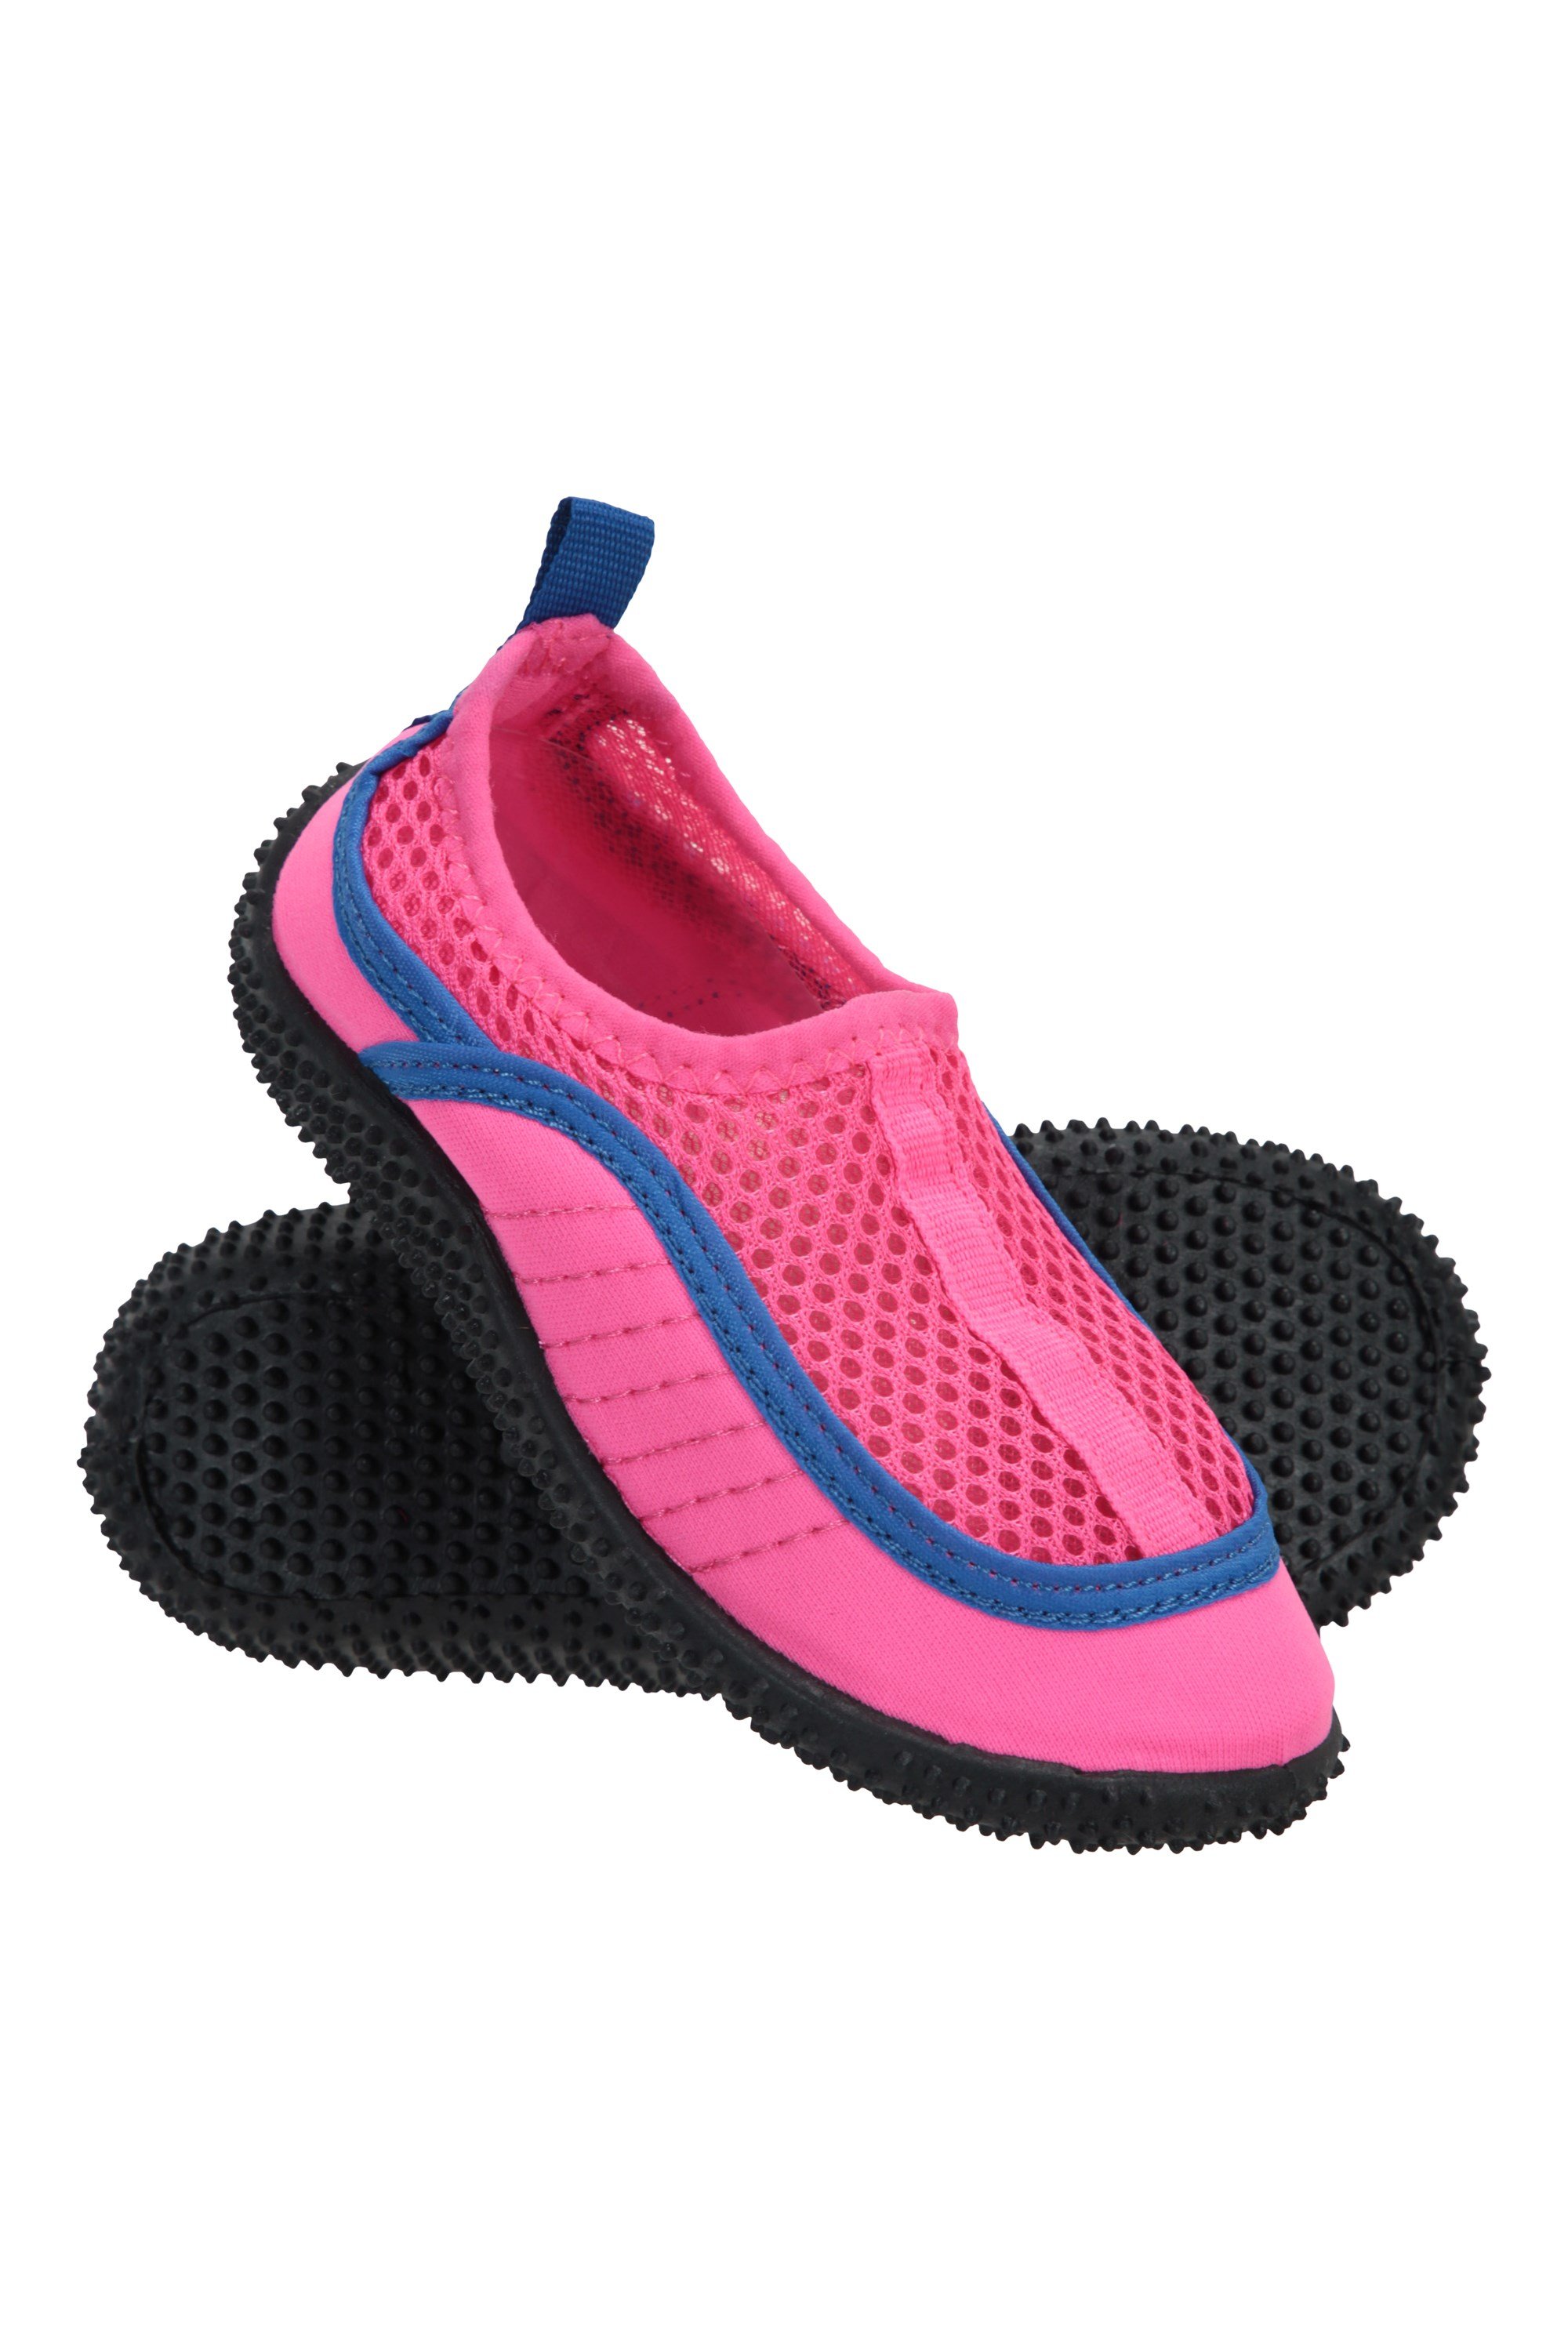 Bermuda Junior Aqua Shoe - Pink